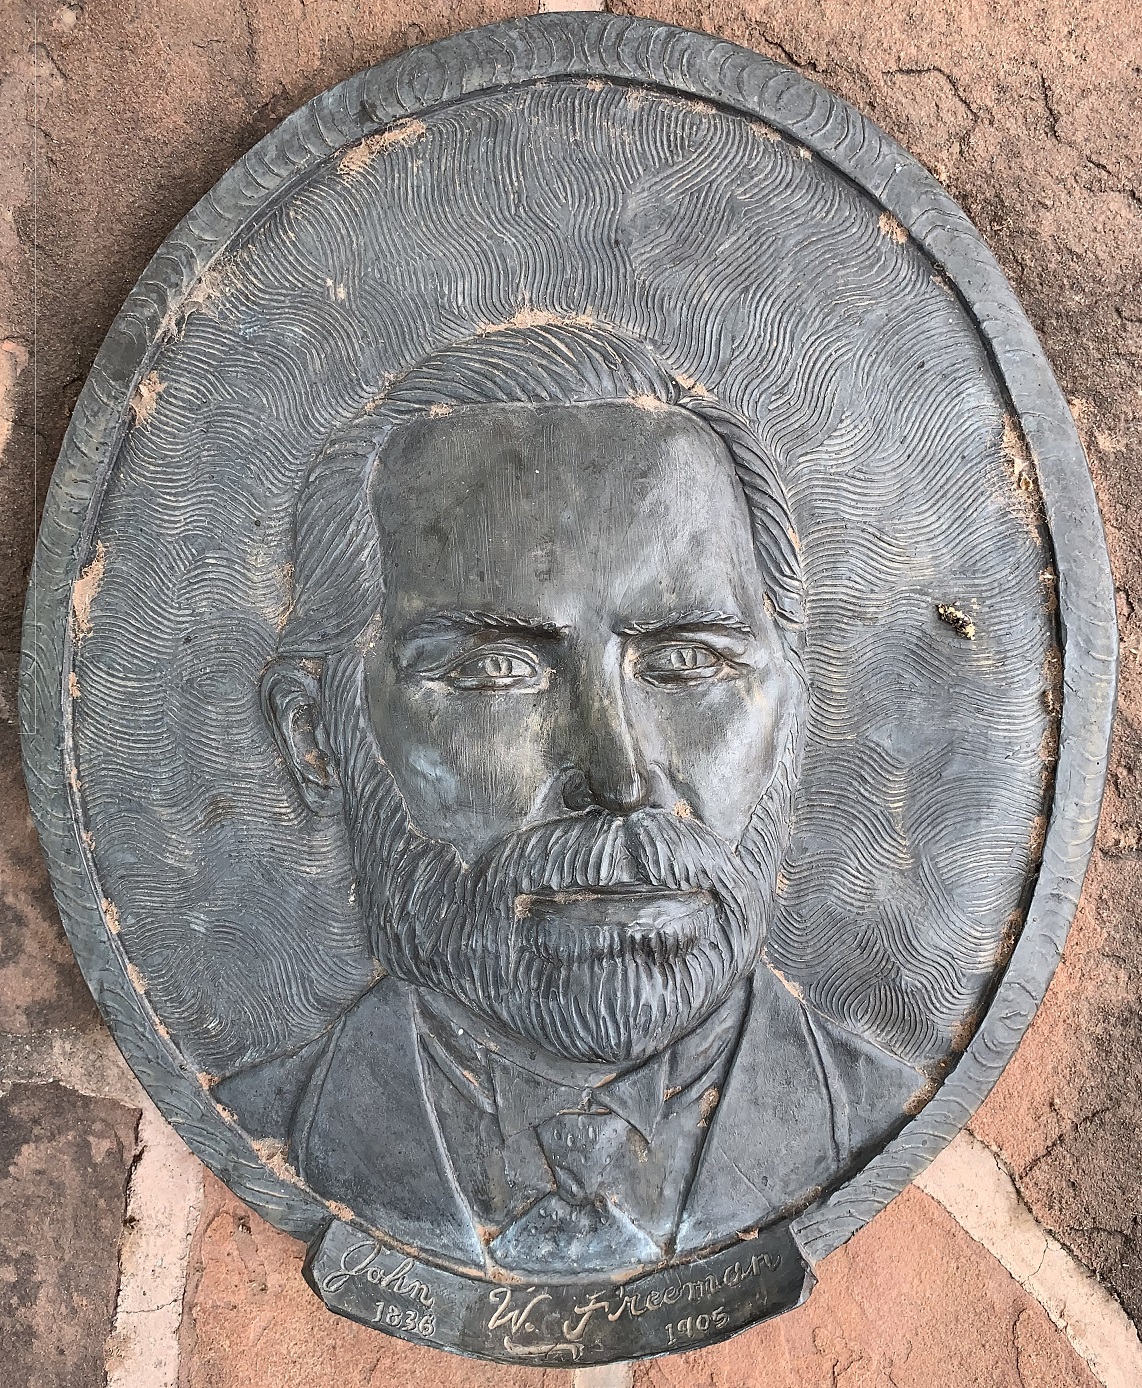 Face plaque of John W. Freeman at the Monument Plaza in Washington, Utah